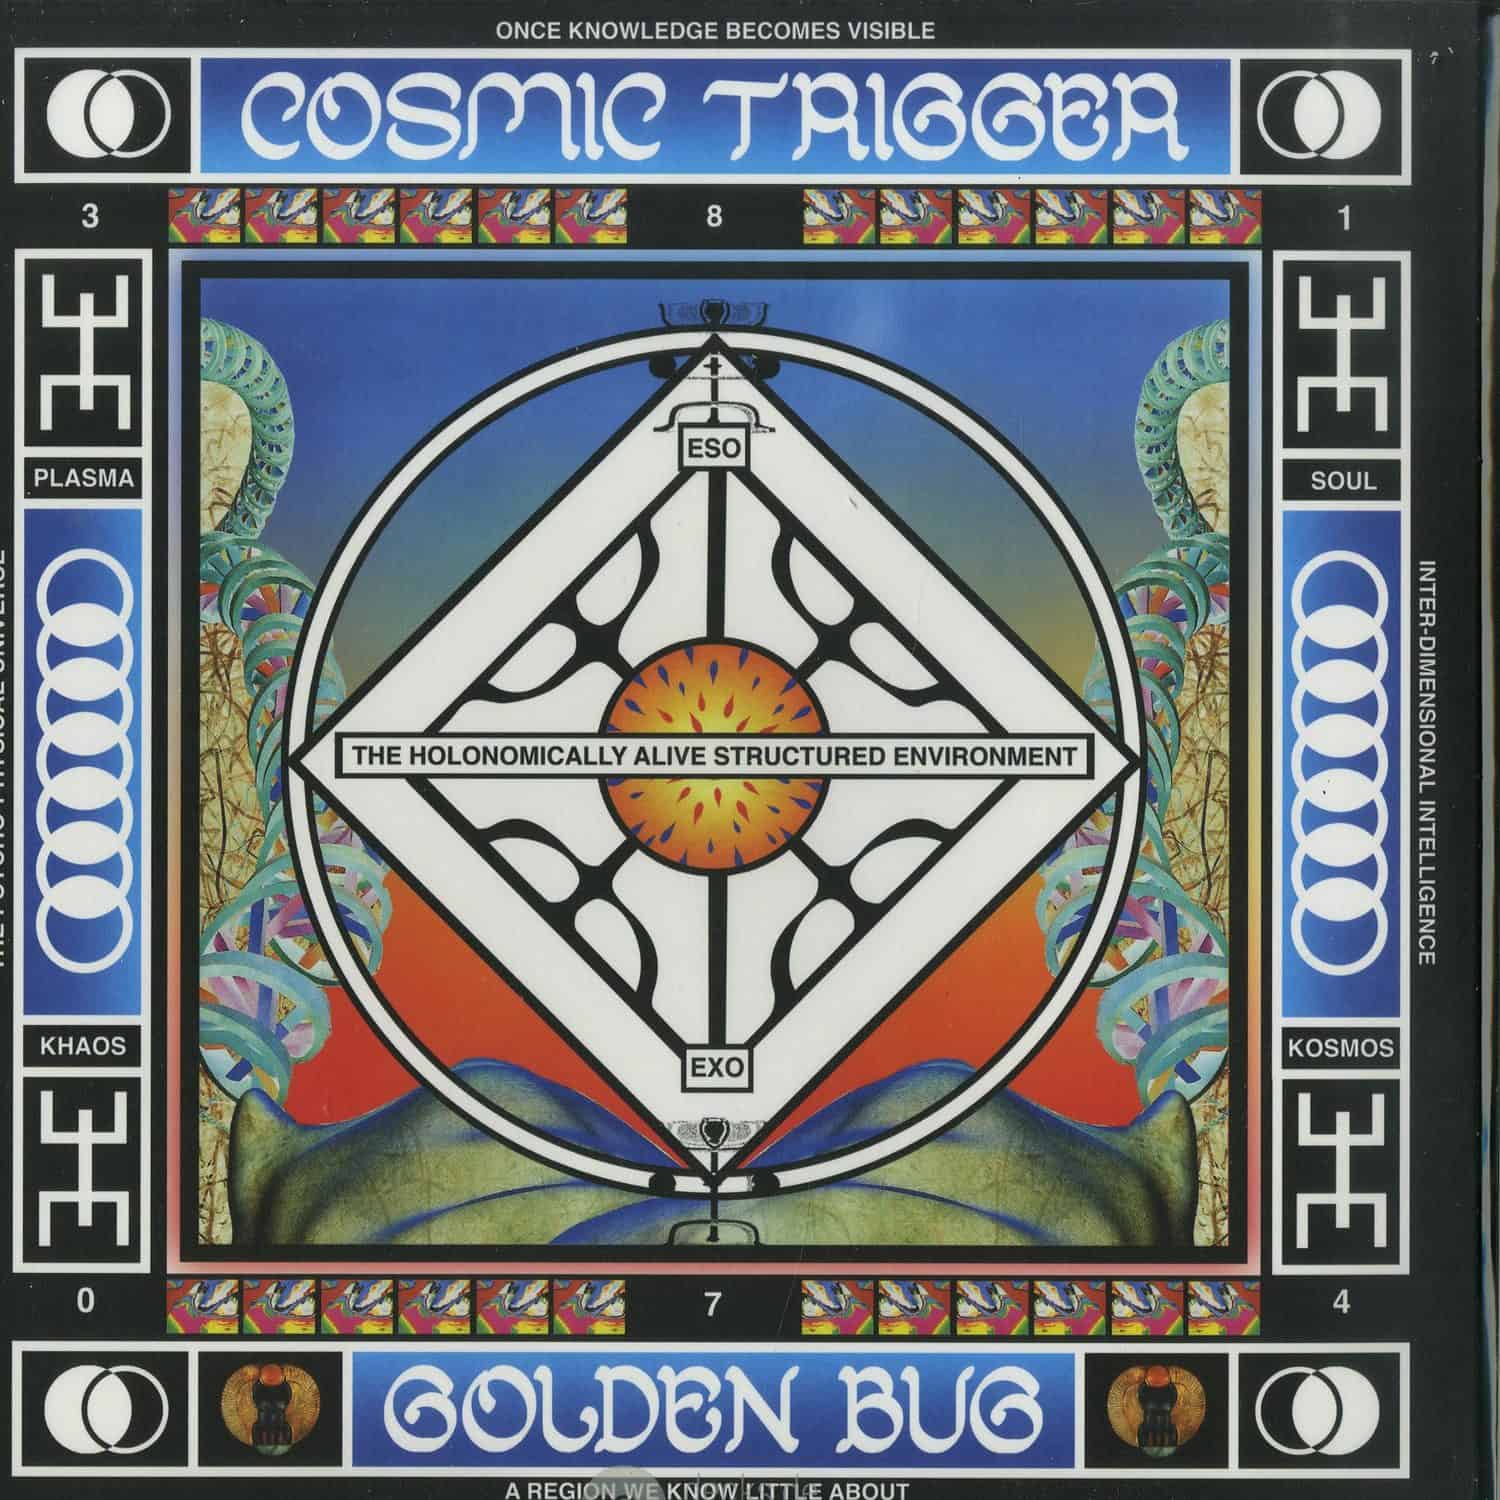 Golden Bug - COSMIC TRIGGER